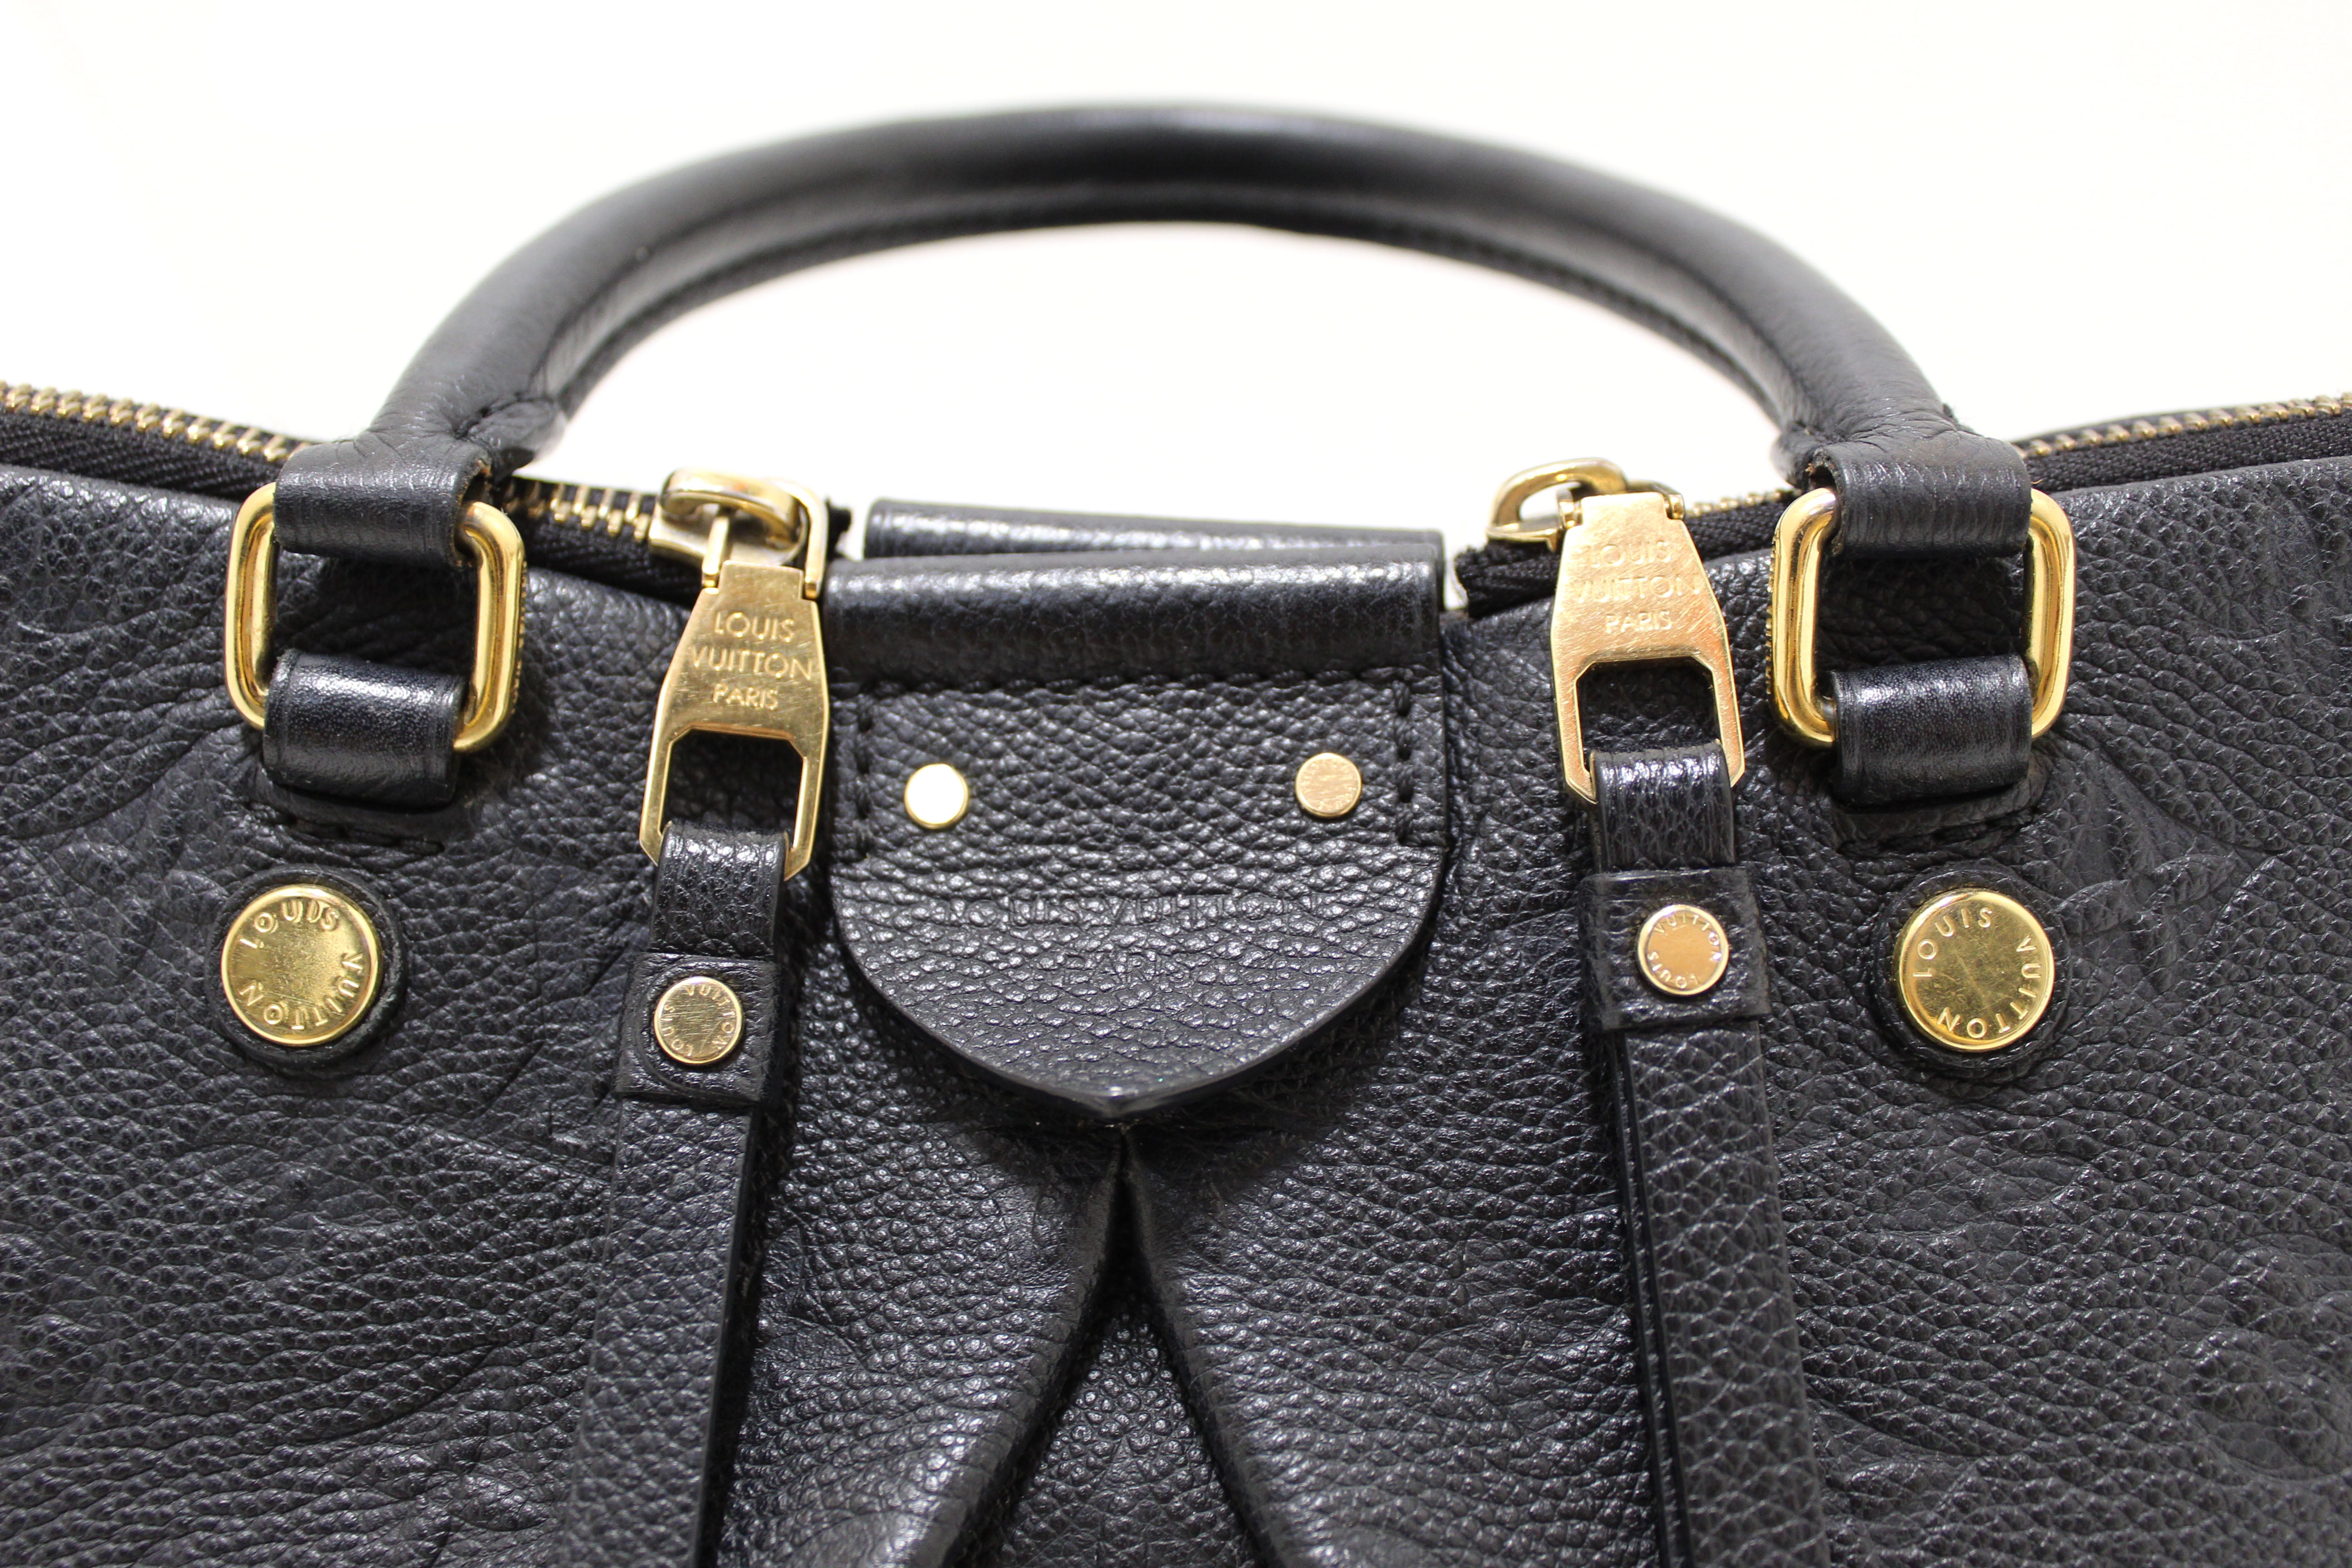 Authentic Louis Vuitton Black Monogram Empreinte Leather Mazarine PM Bag